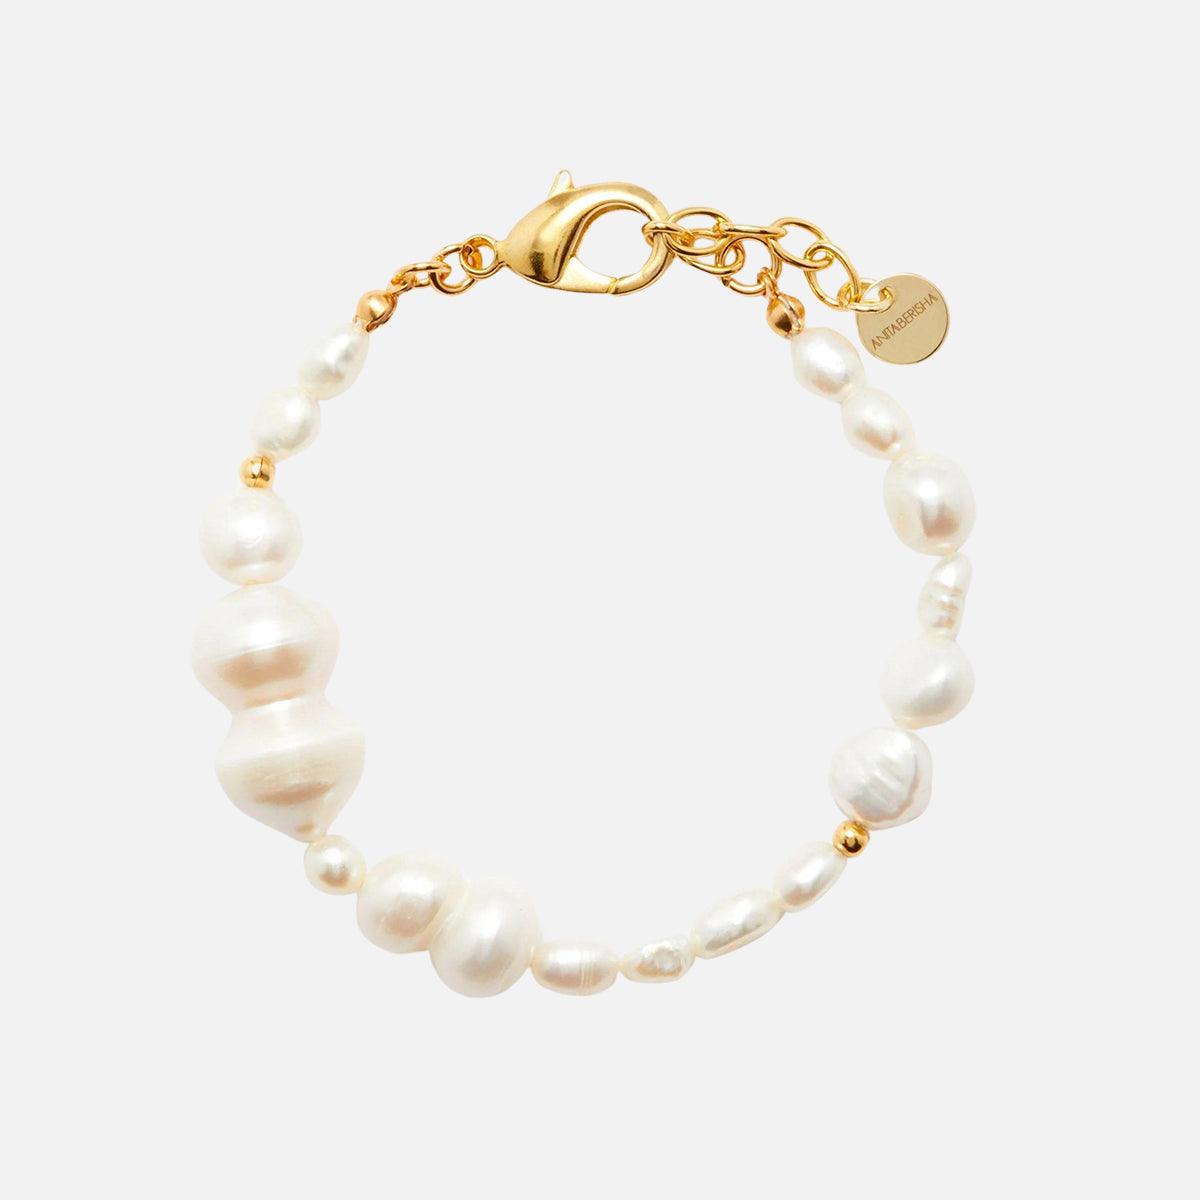 Anita Berisha Celestial Bracelet - At Present Jewelry